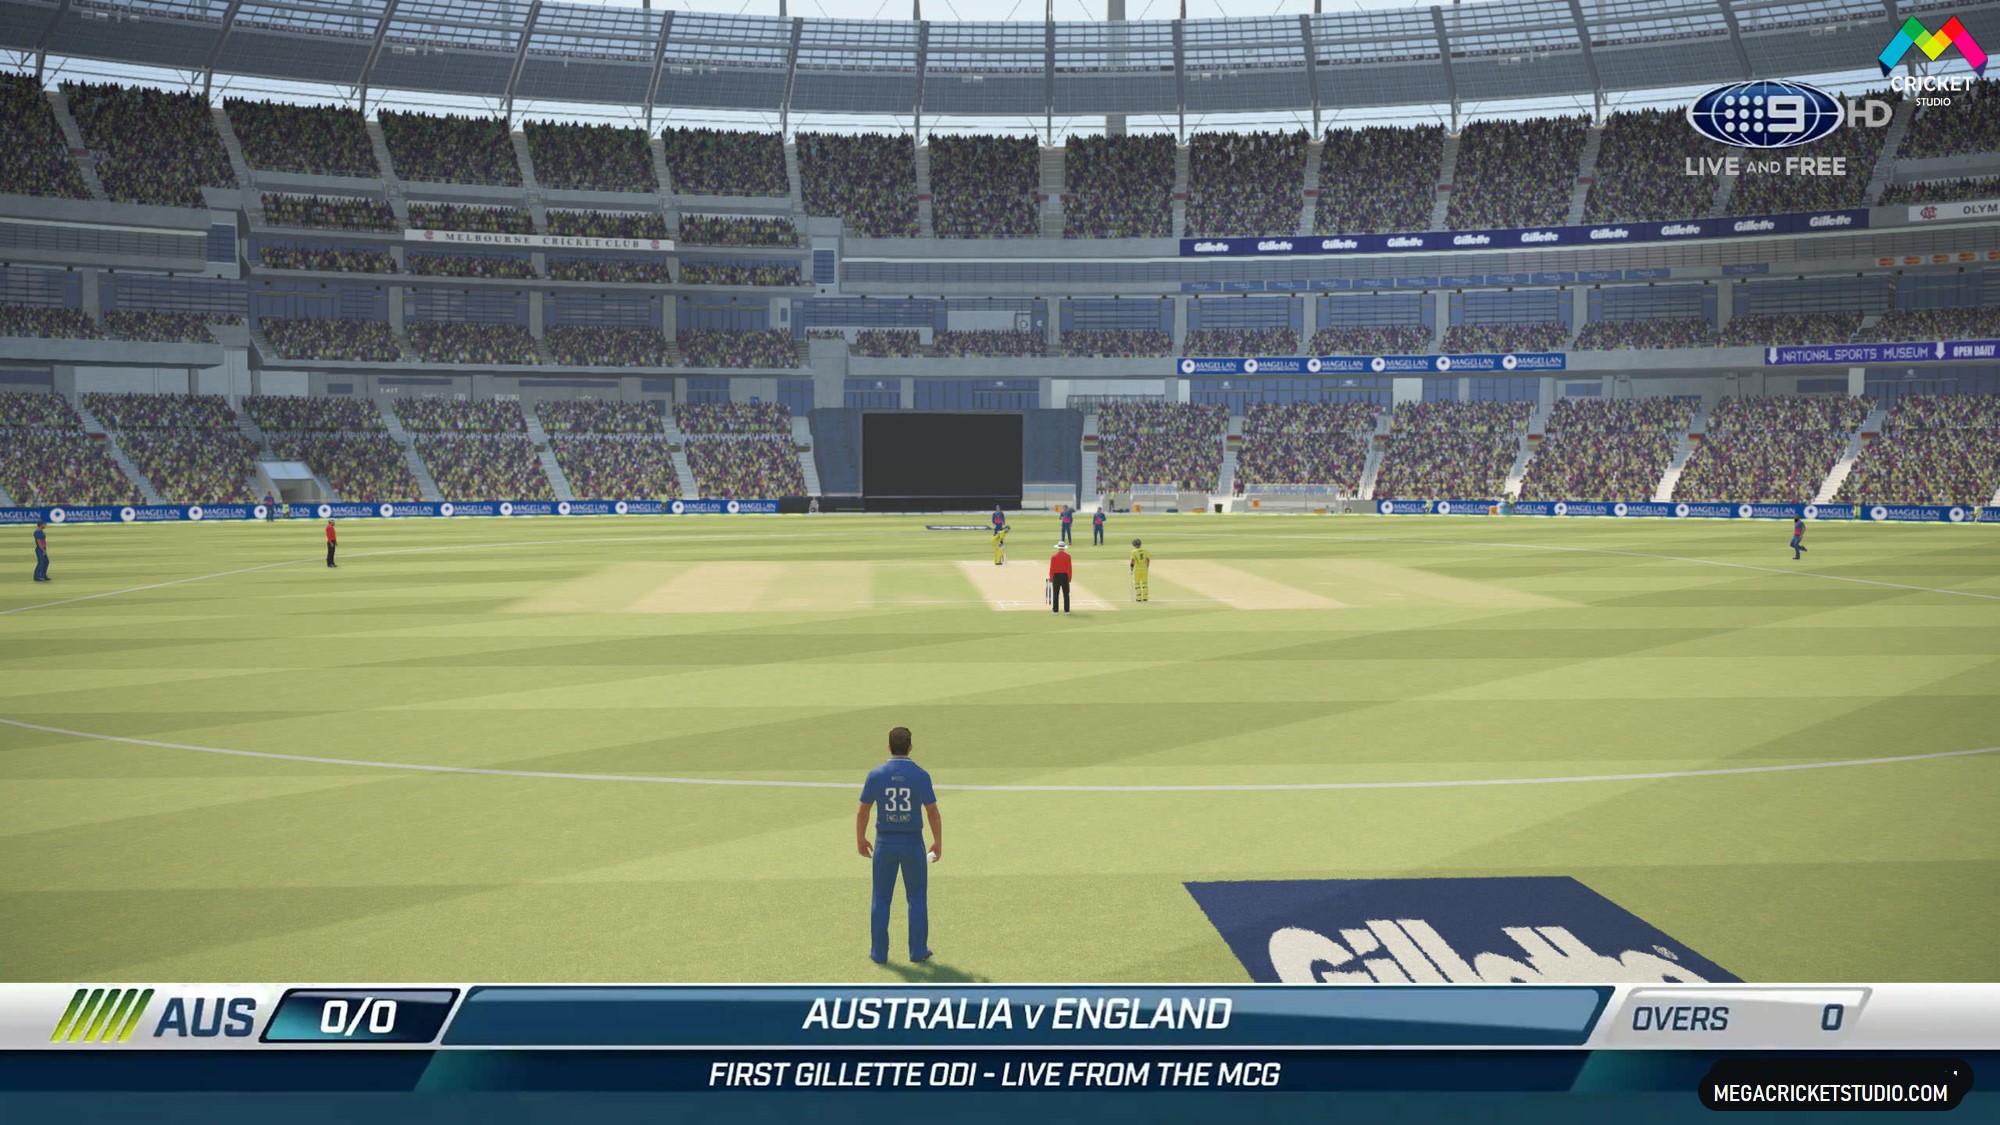 ashes cricket 2017 download full game crack